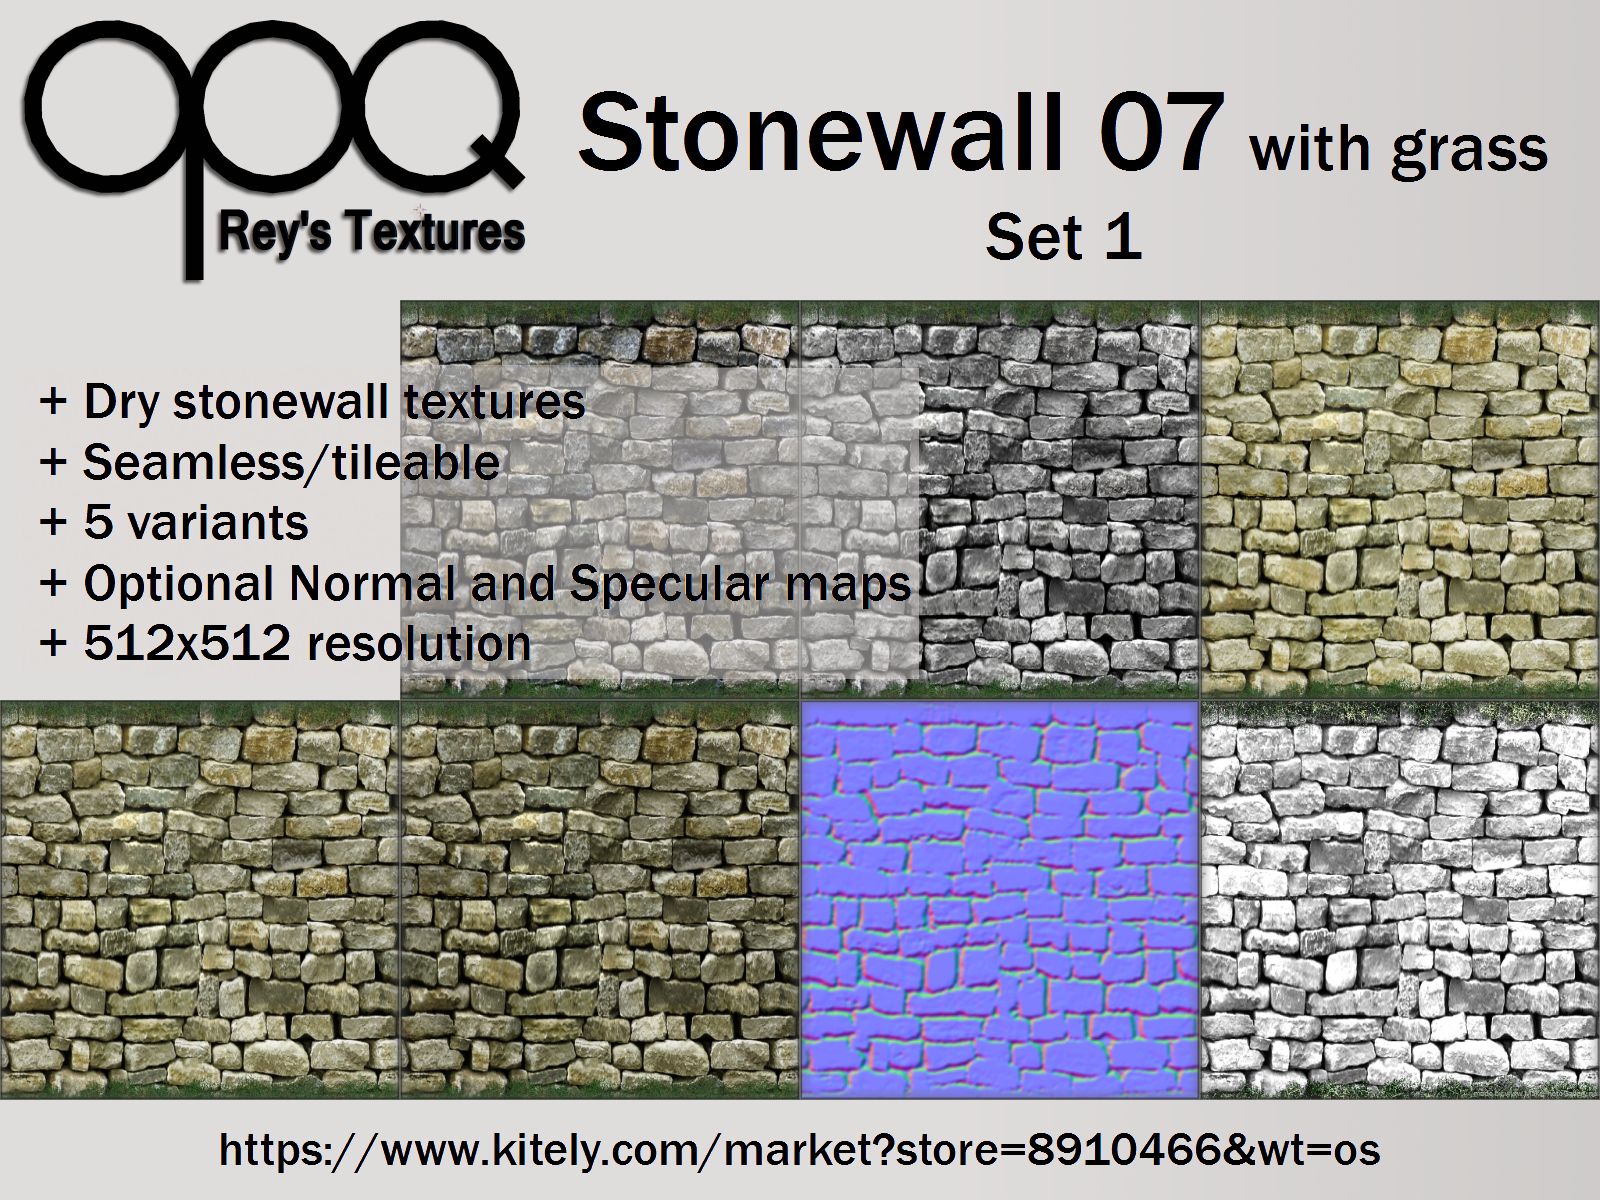 Rey's Stonewall 07 with Grass Set 2 Poster Kitely.jpg